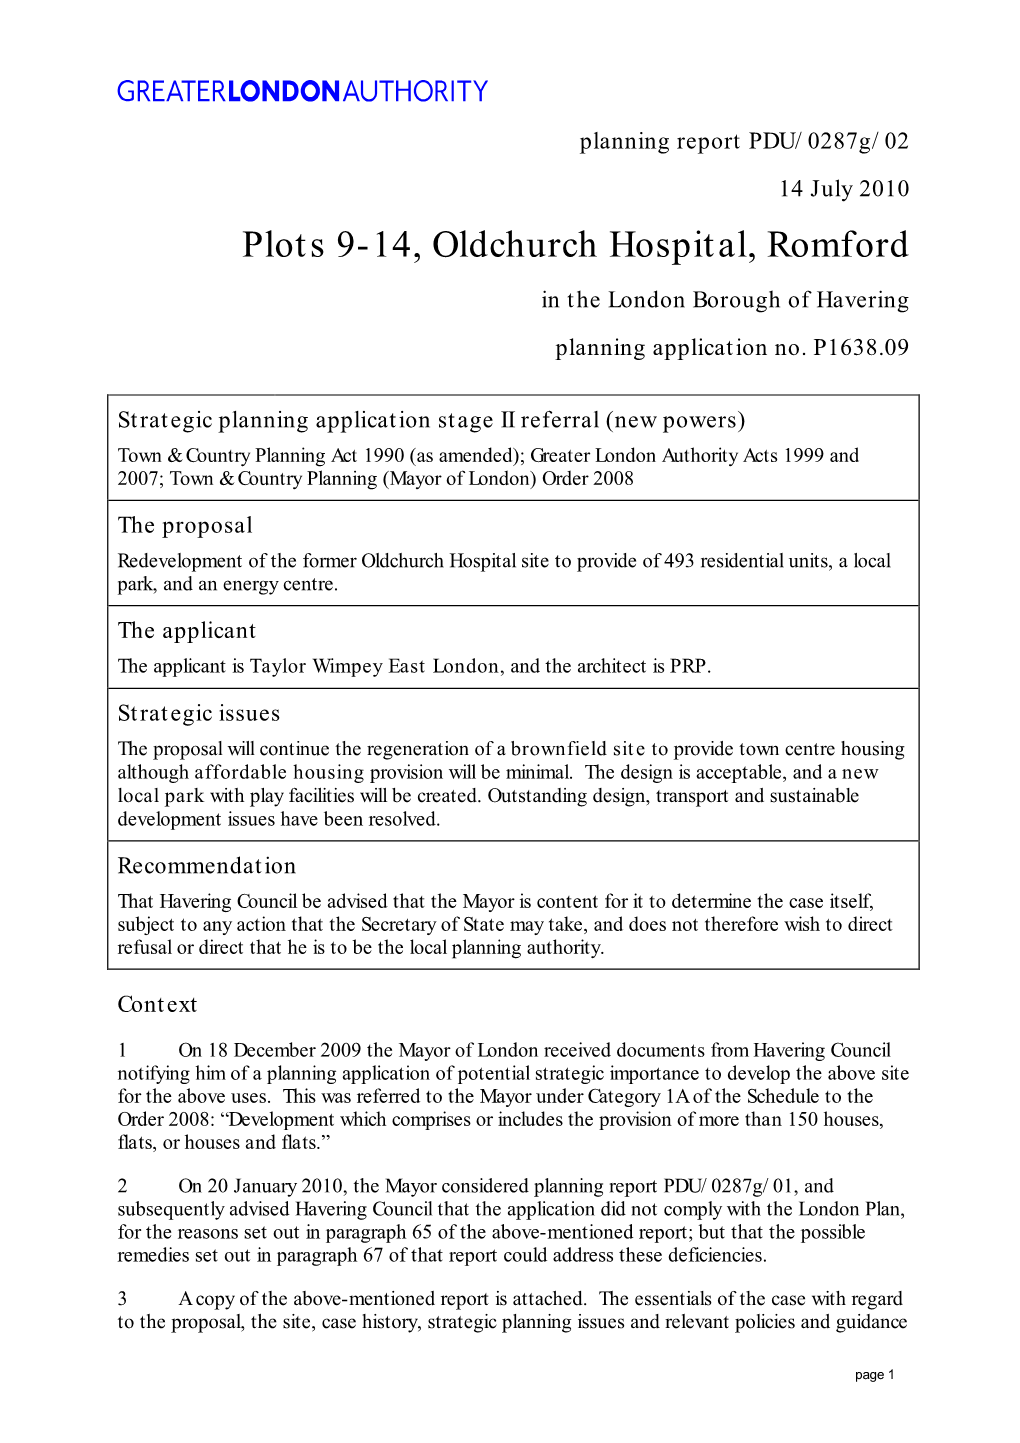 Plots 9-14, Oldchurch Hospital, Romford